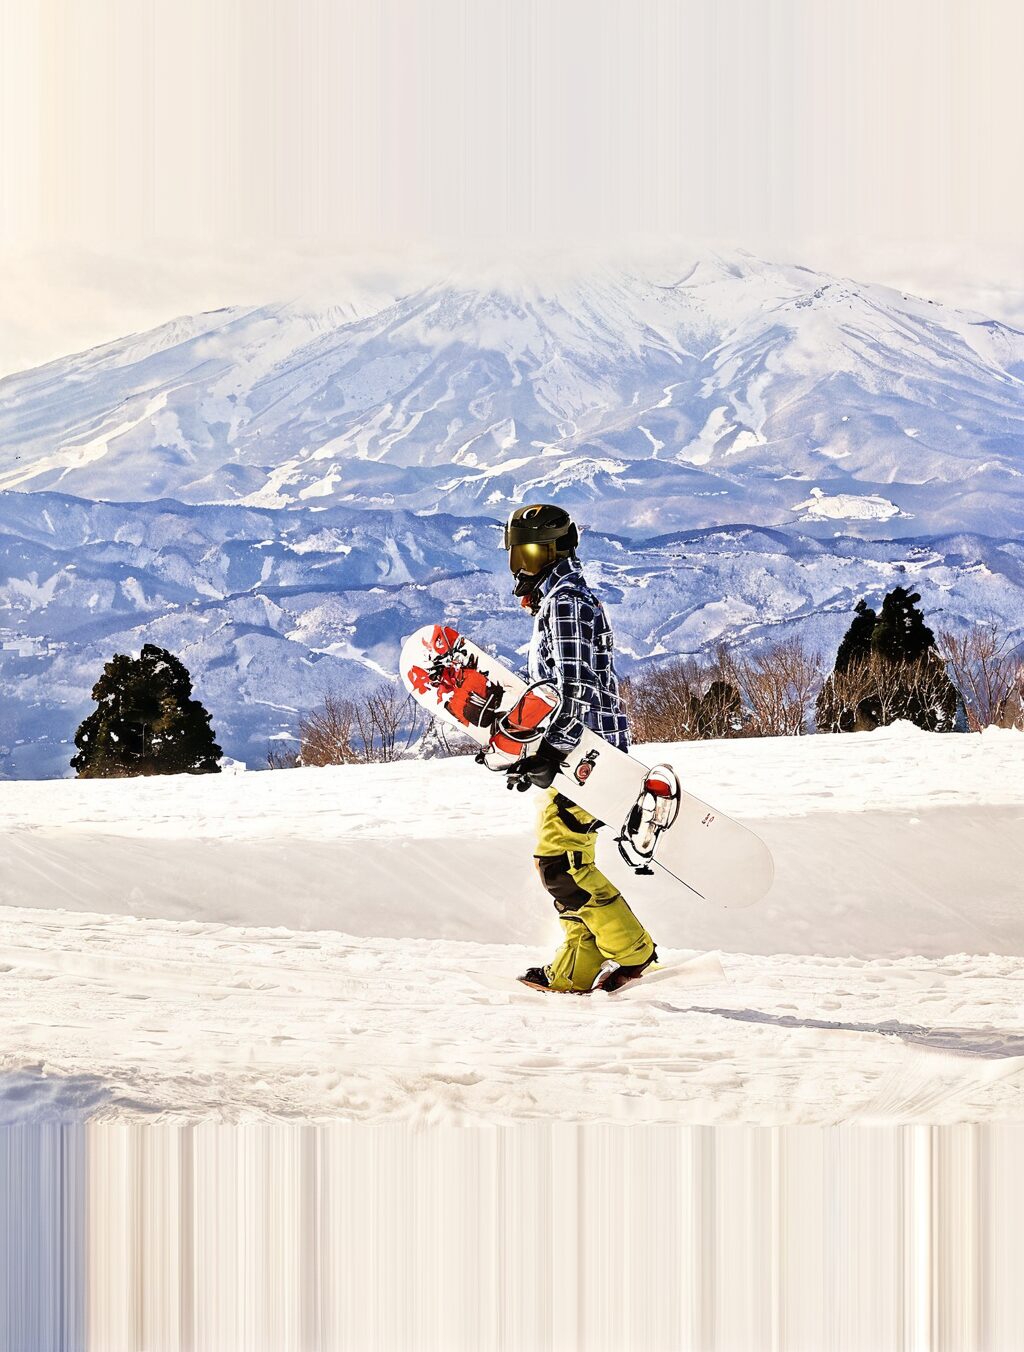 when is japan's ski season